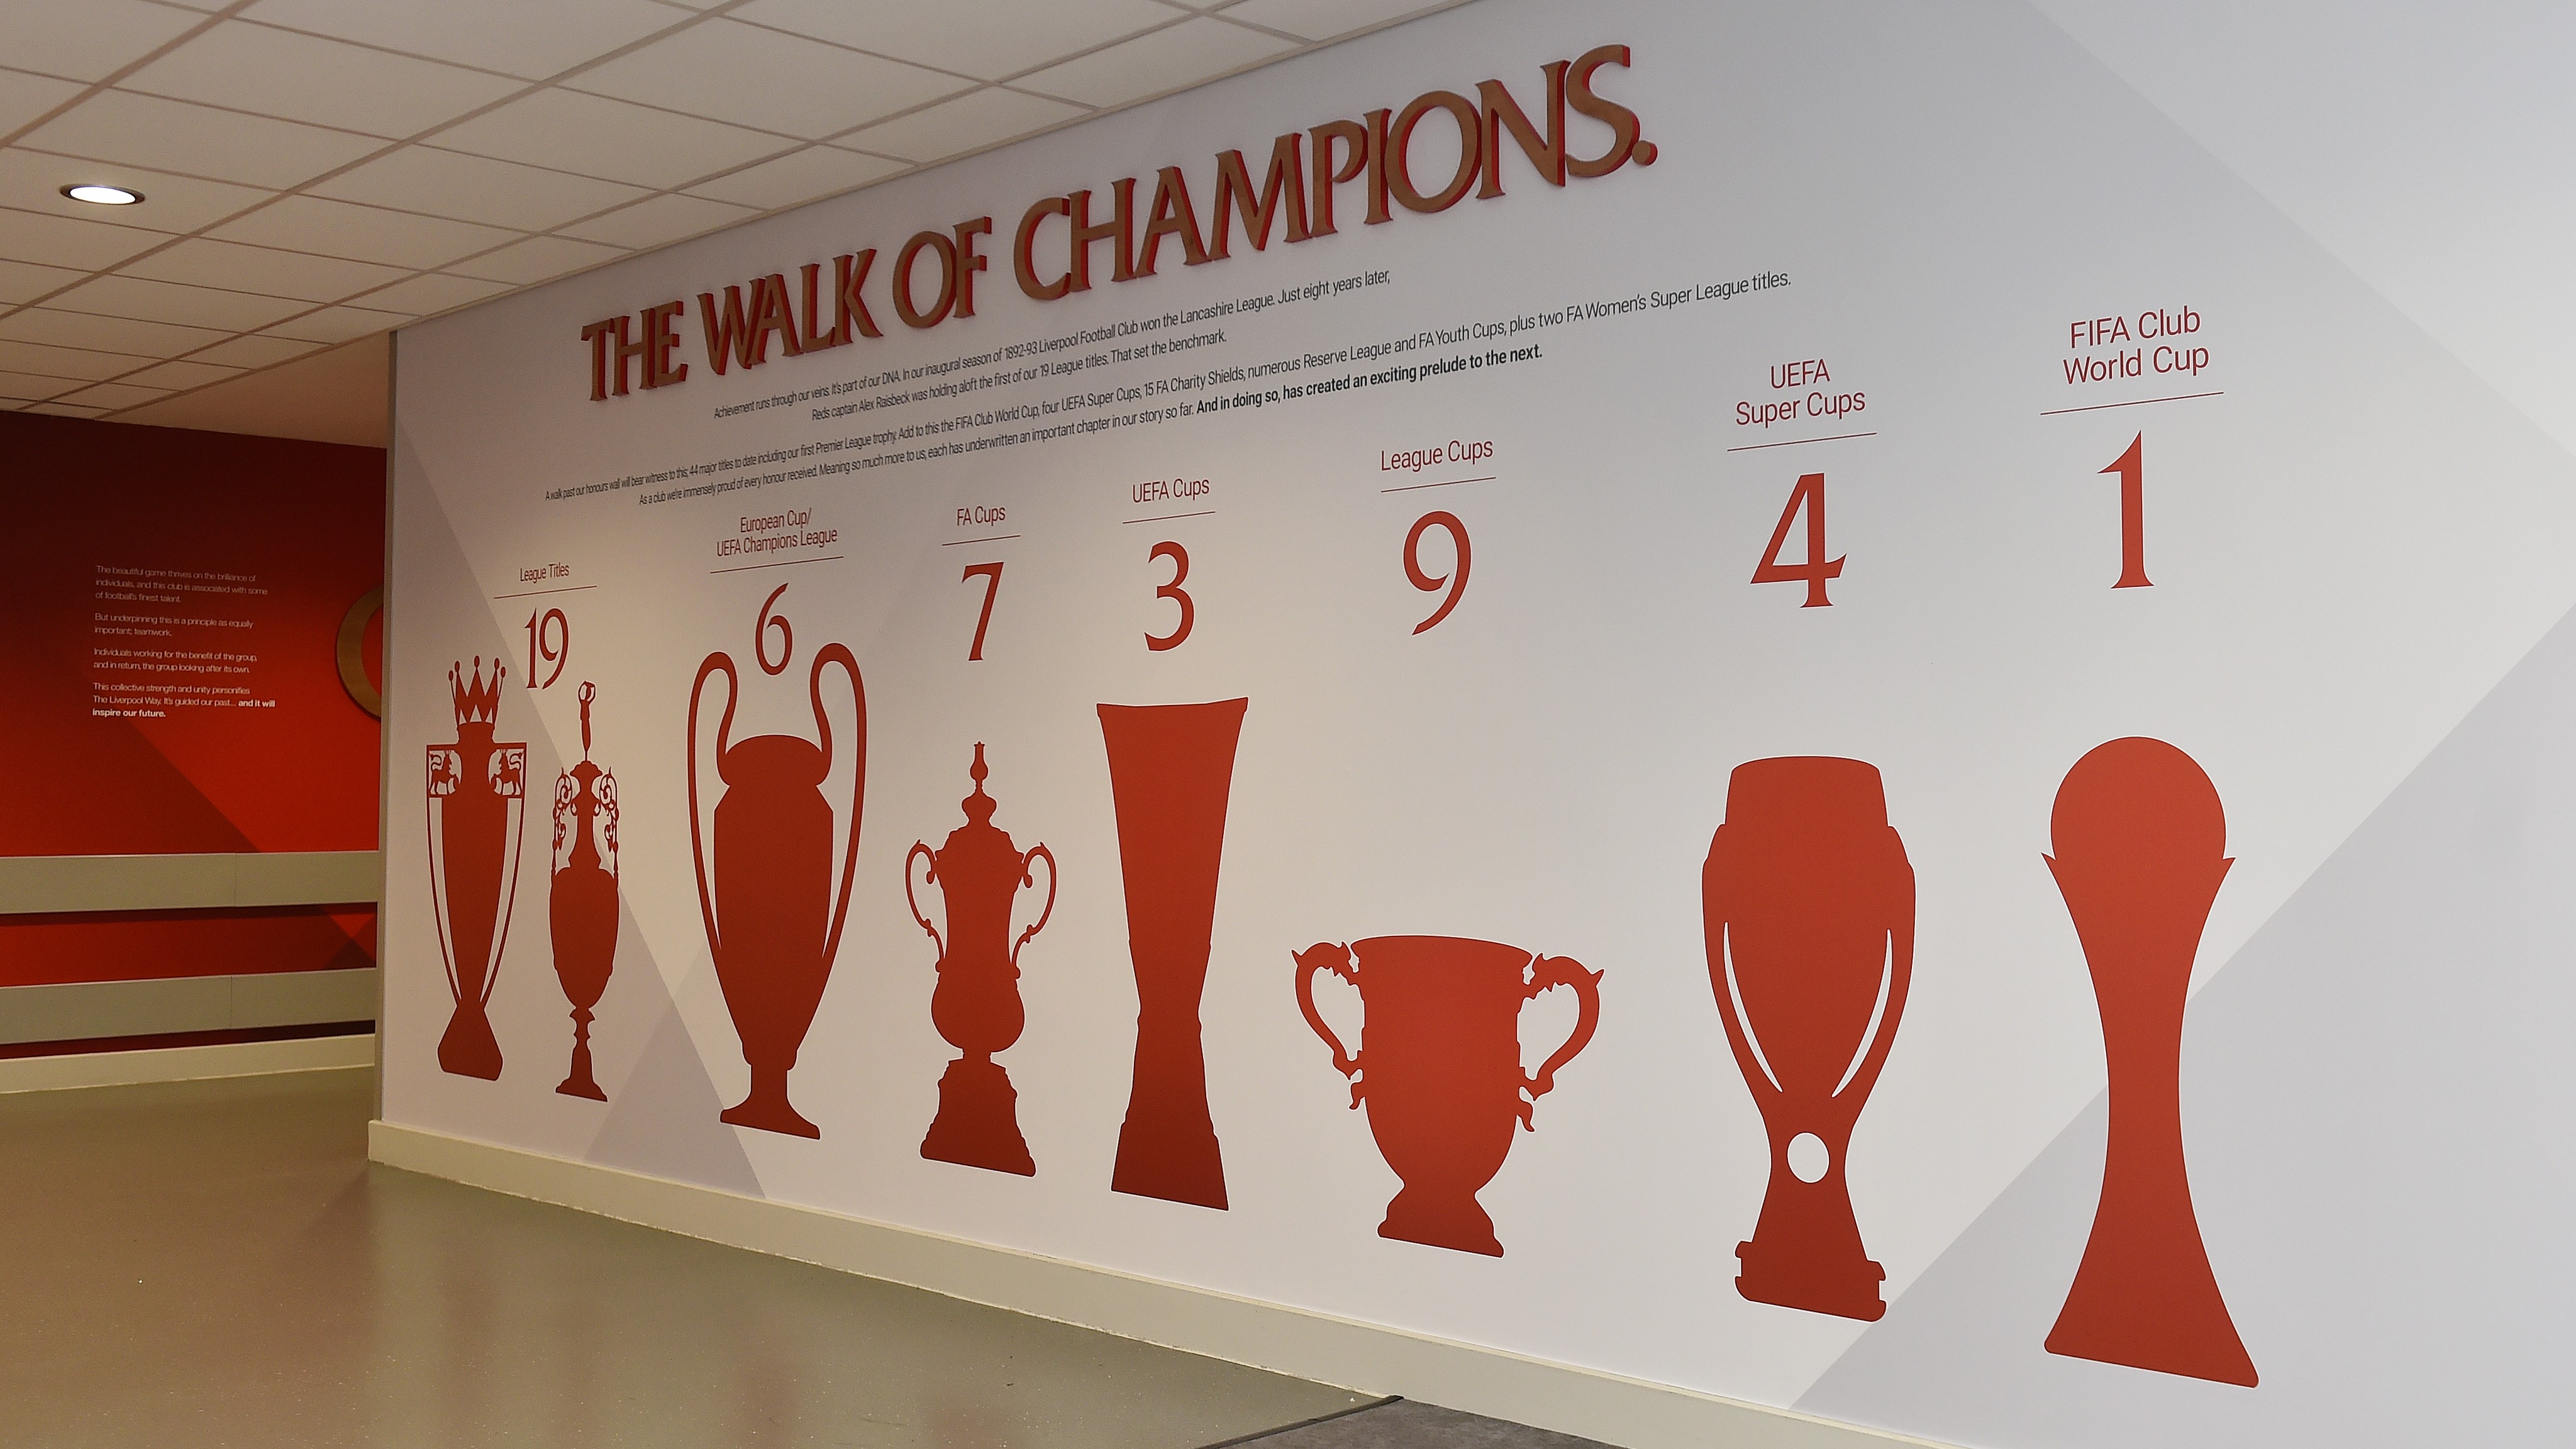 Liverpool FC Twitter: "The Champions Wall updates / X